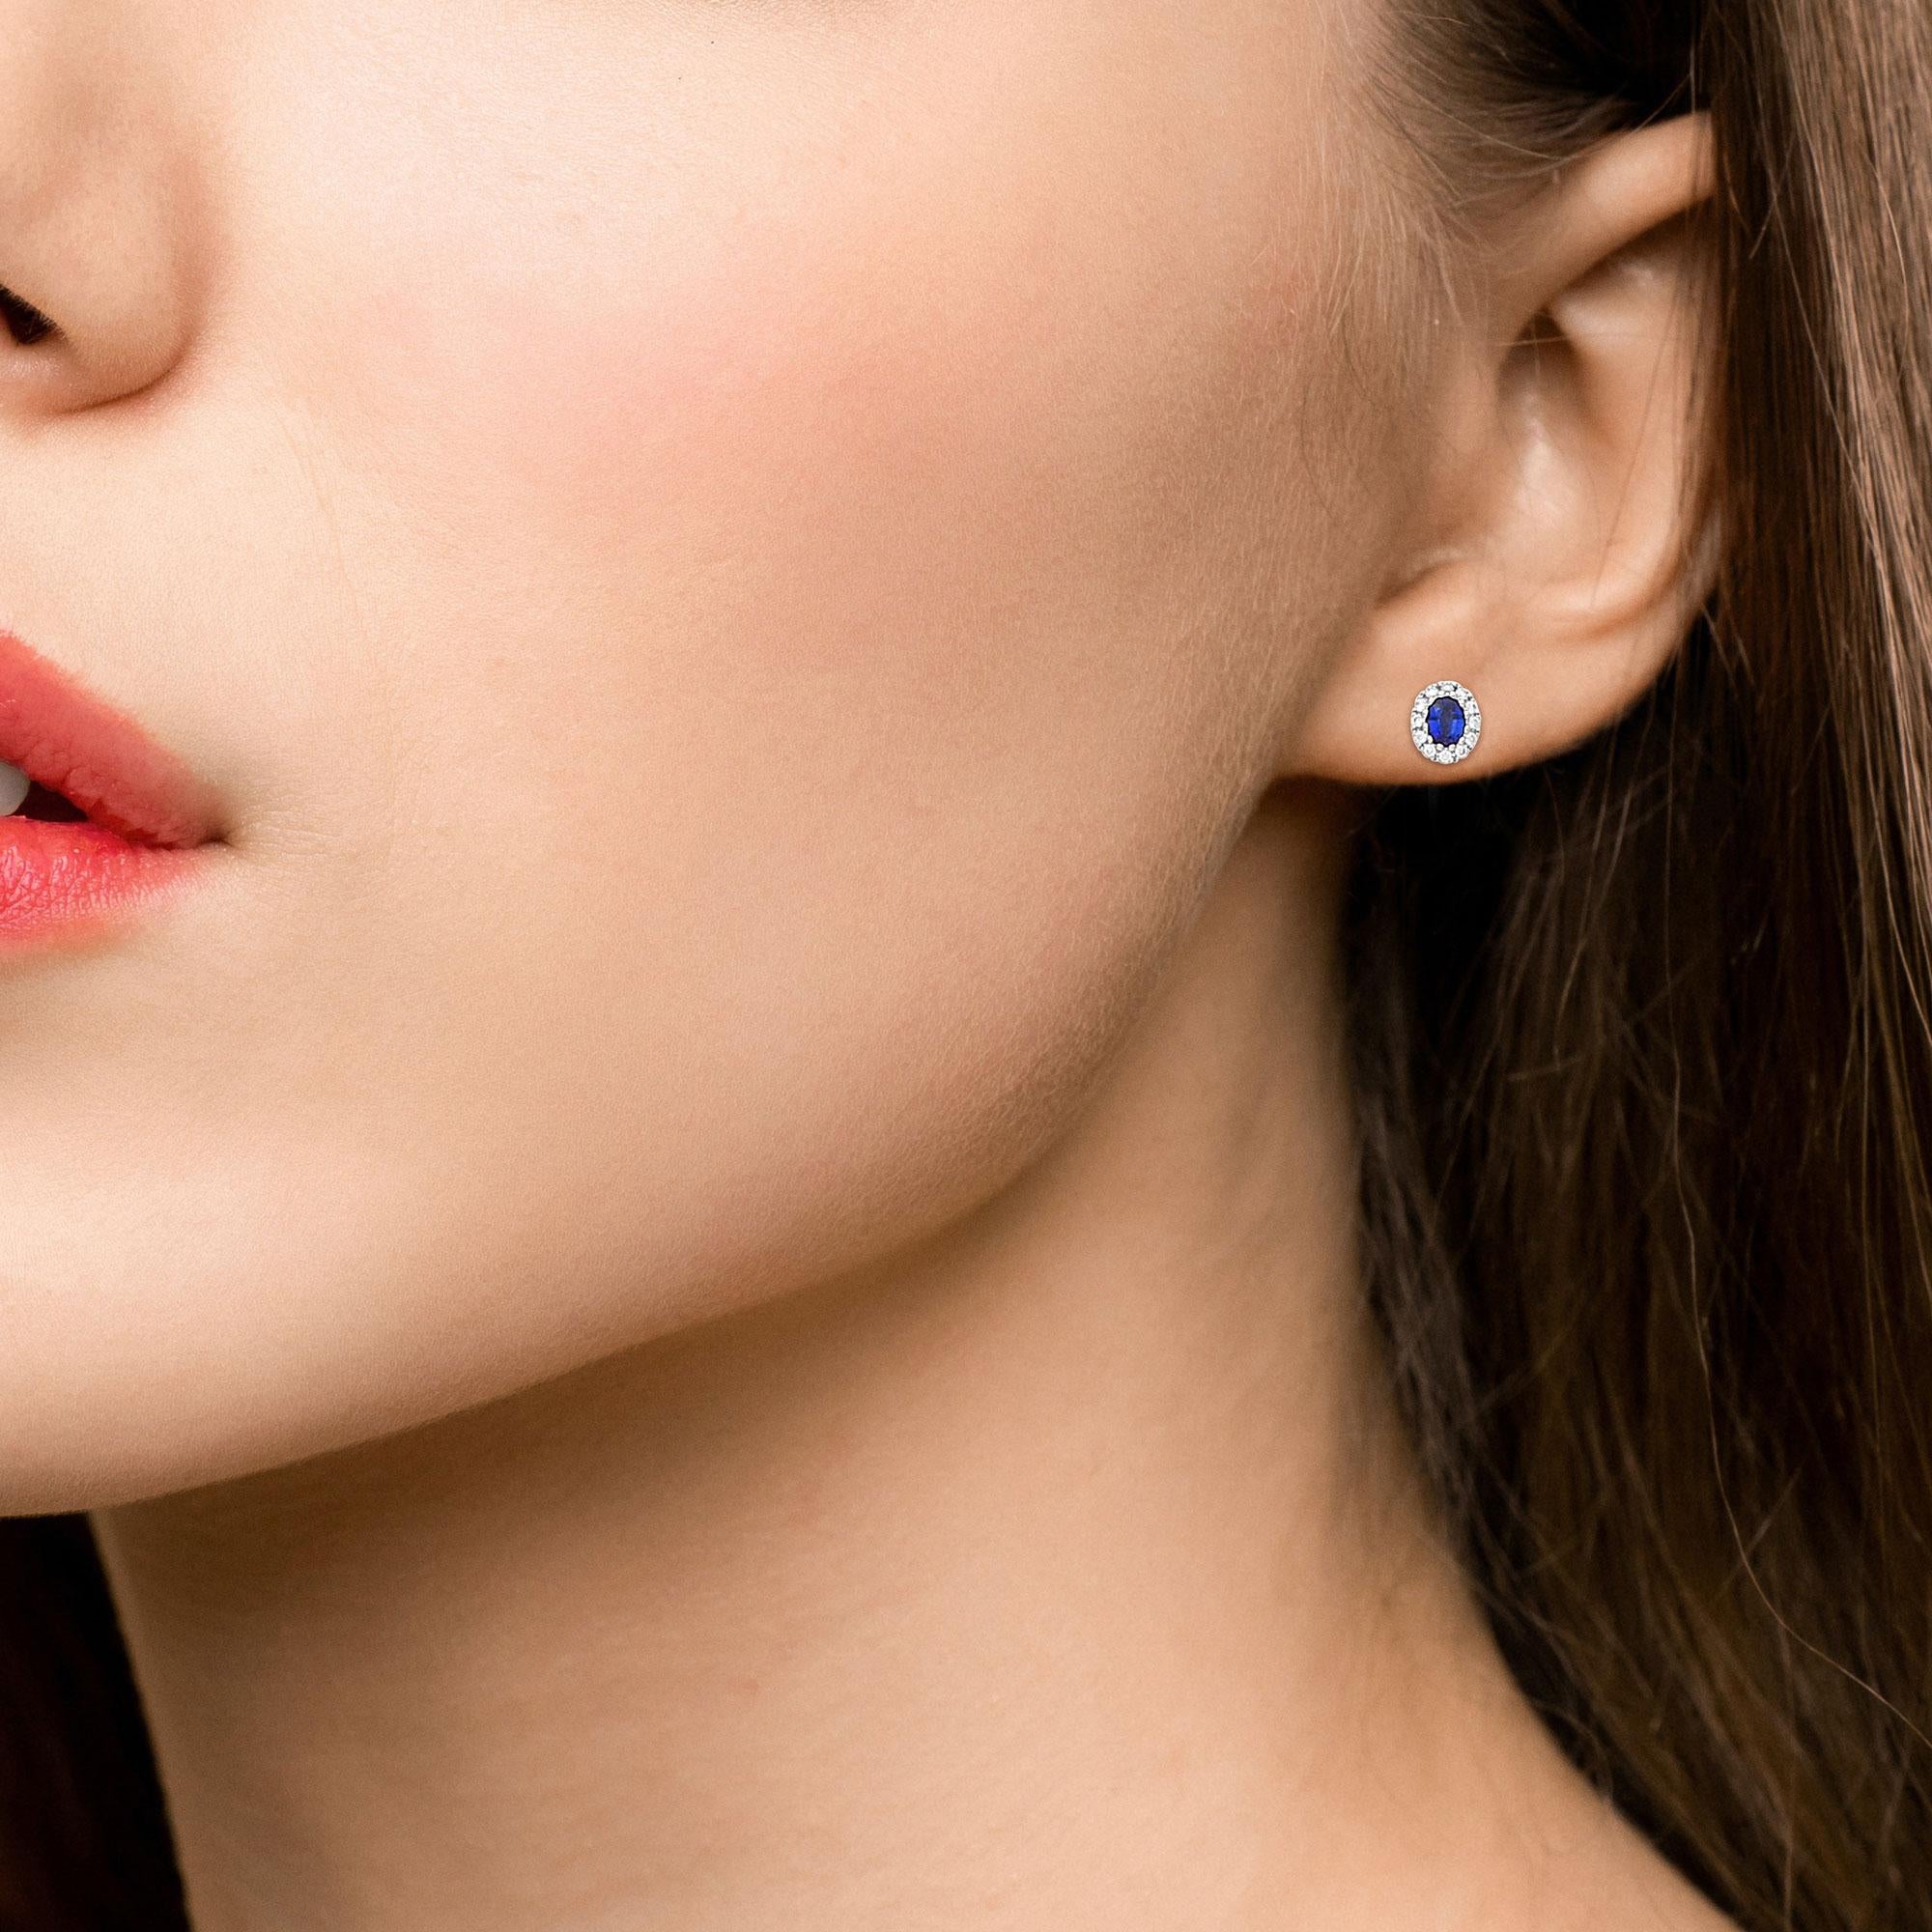 1 carat diamond earrings